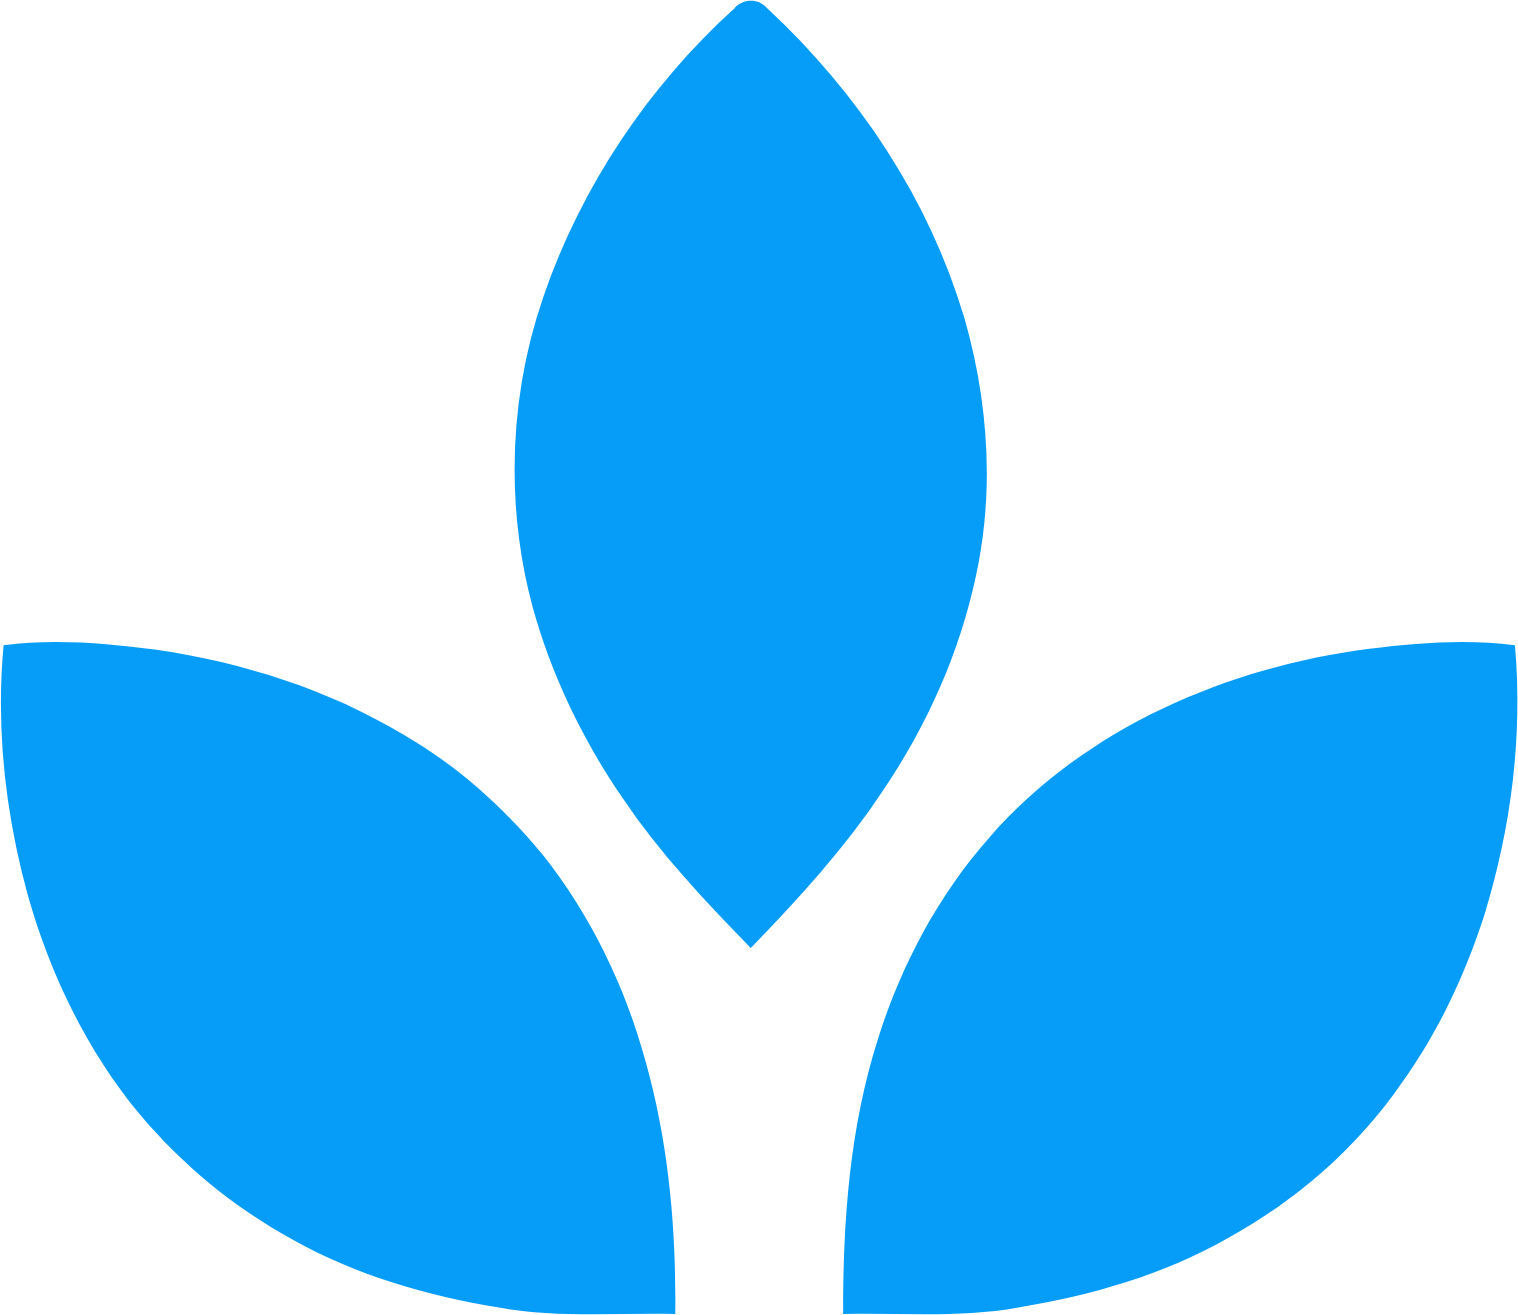 InterCure logo (transparent PNG)